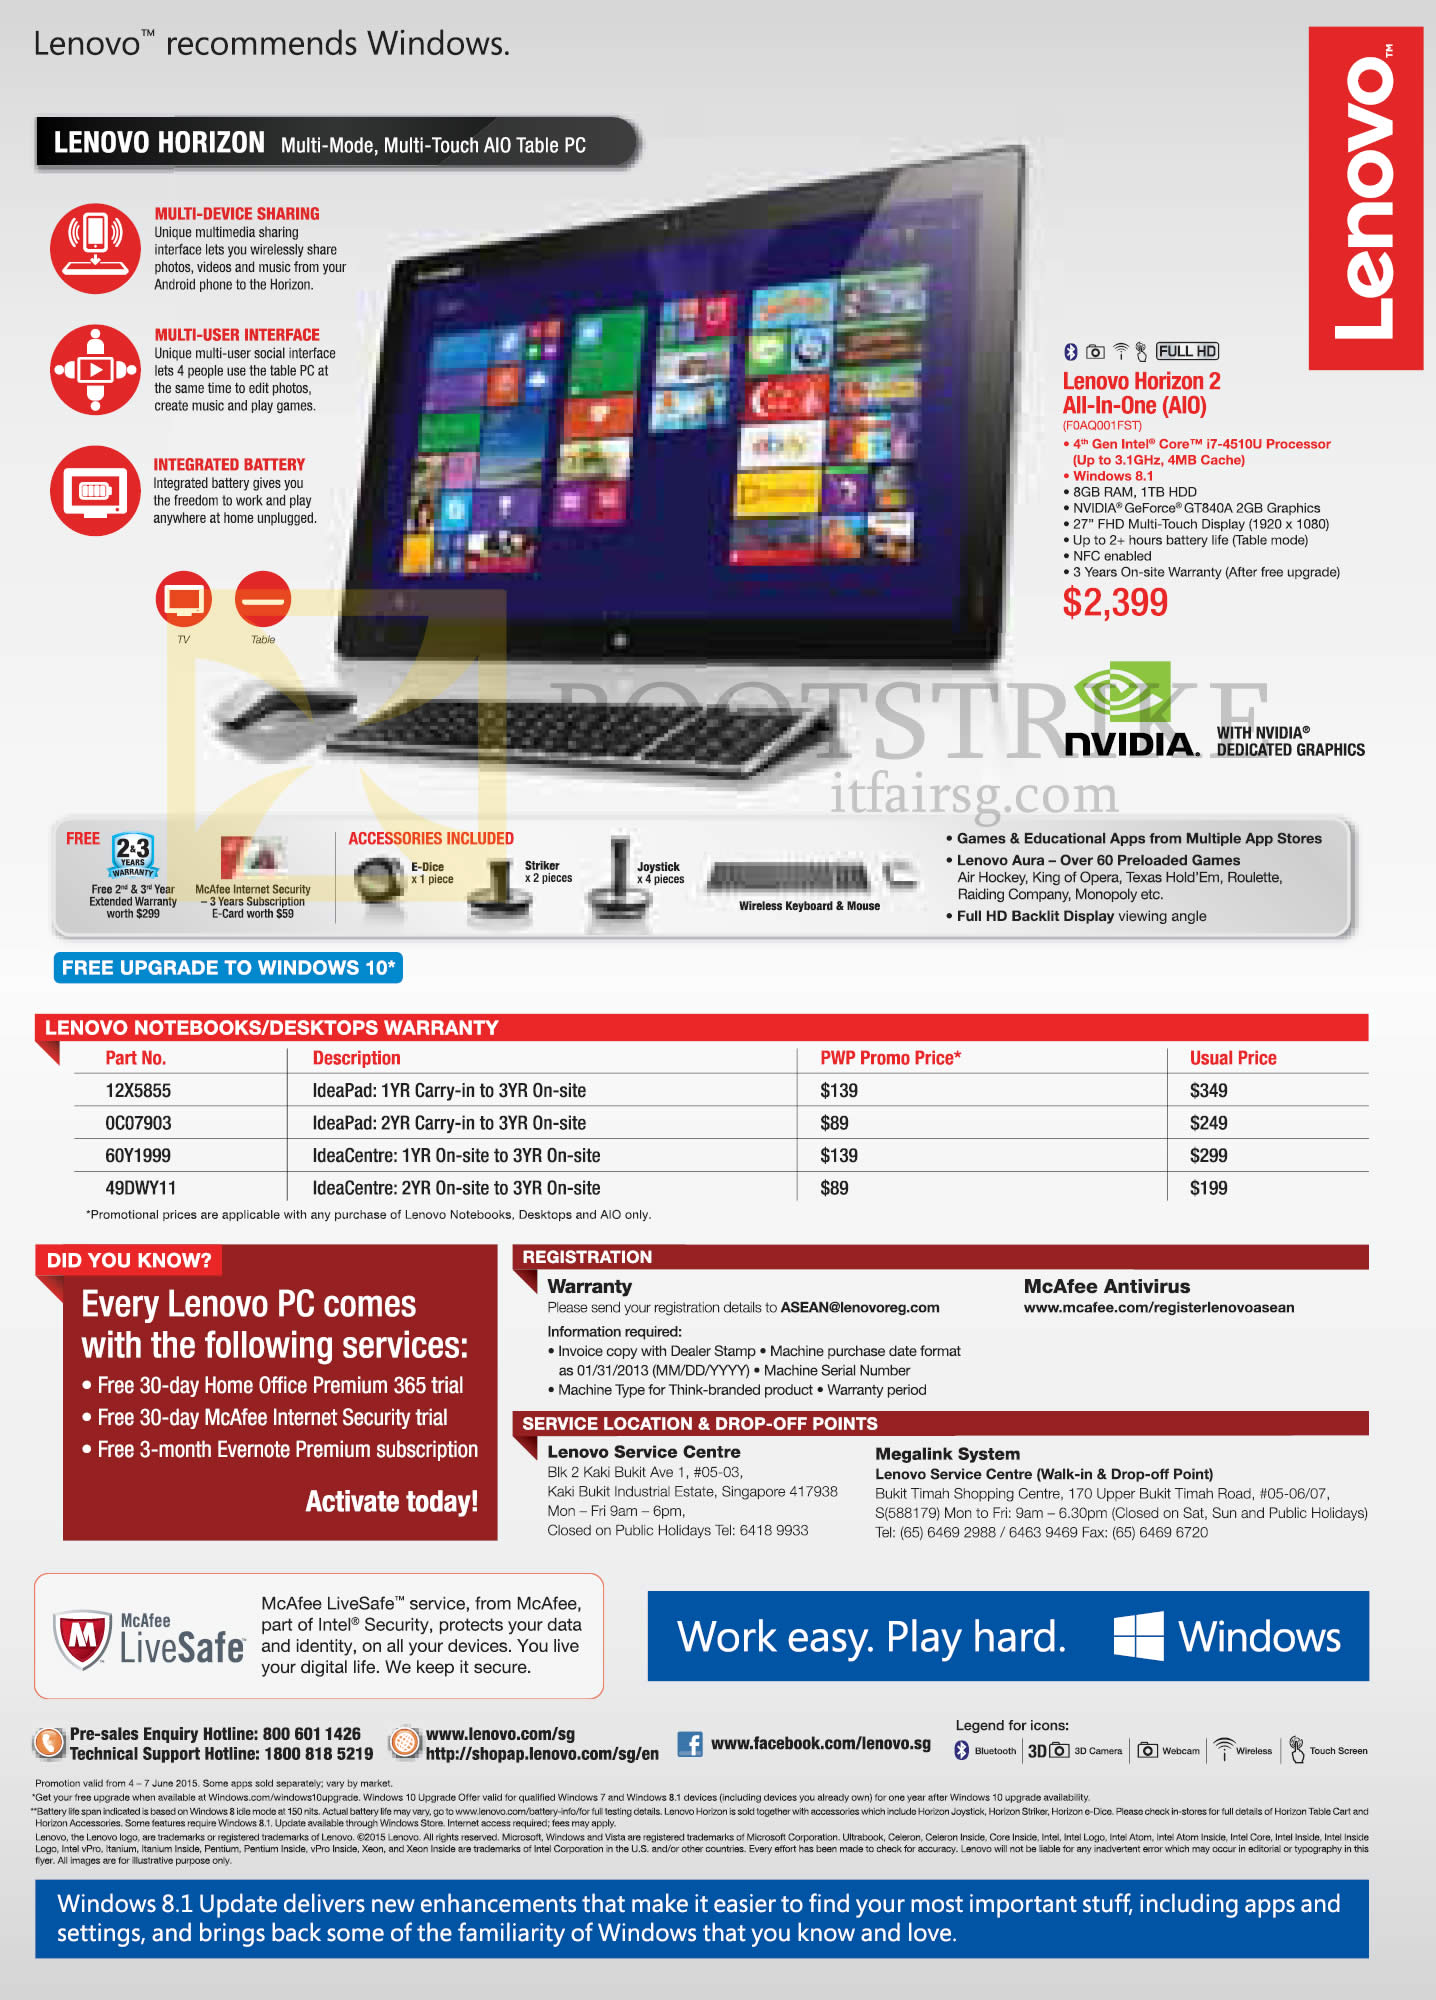 PC SHOW 2015 price list image brochure of Lenovo Horizon 2 AIO Desktop Table PC, Warranty